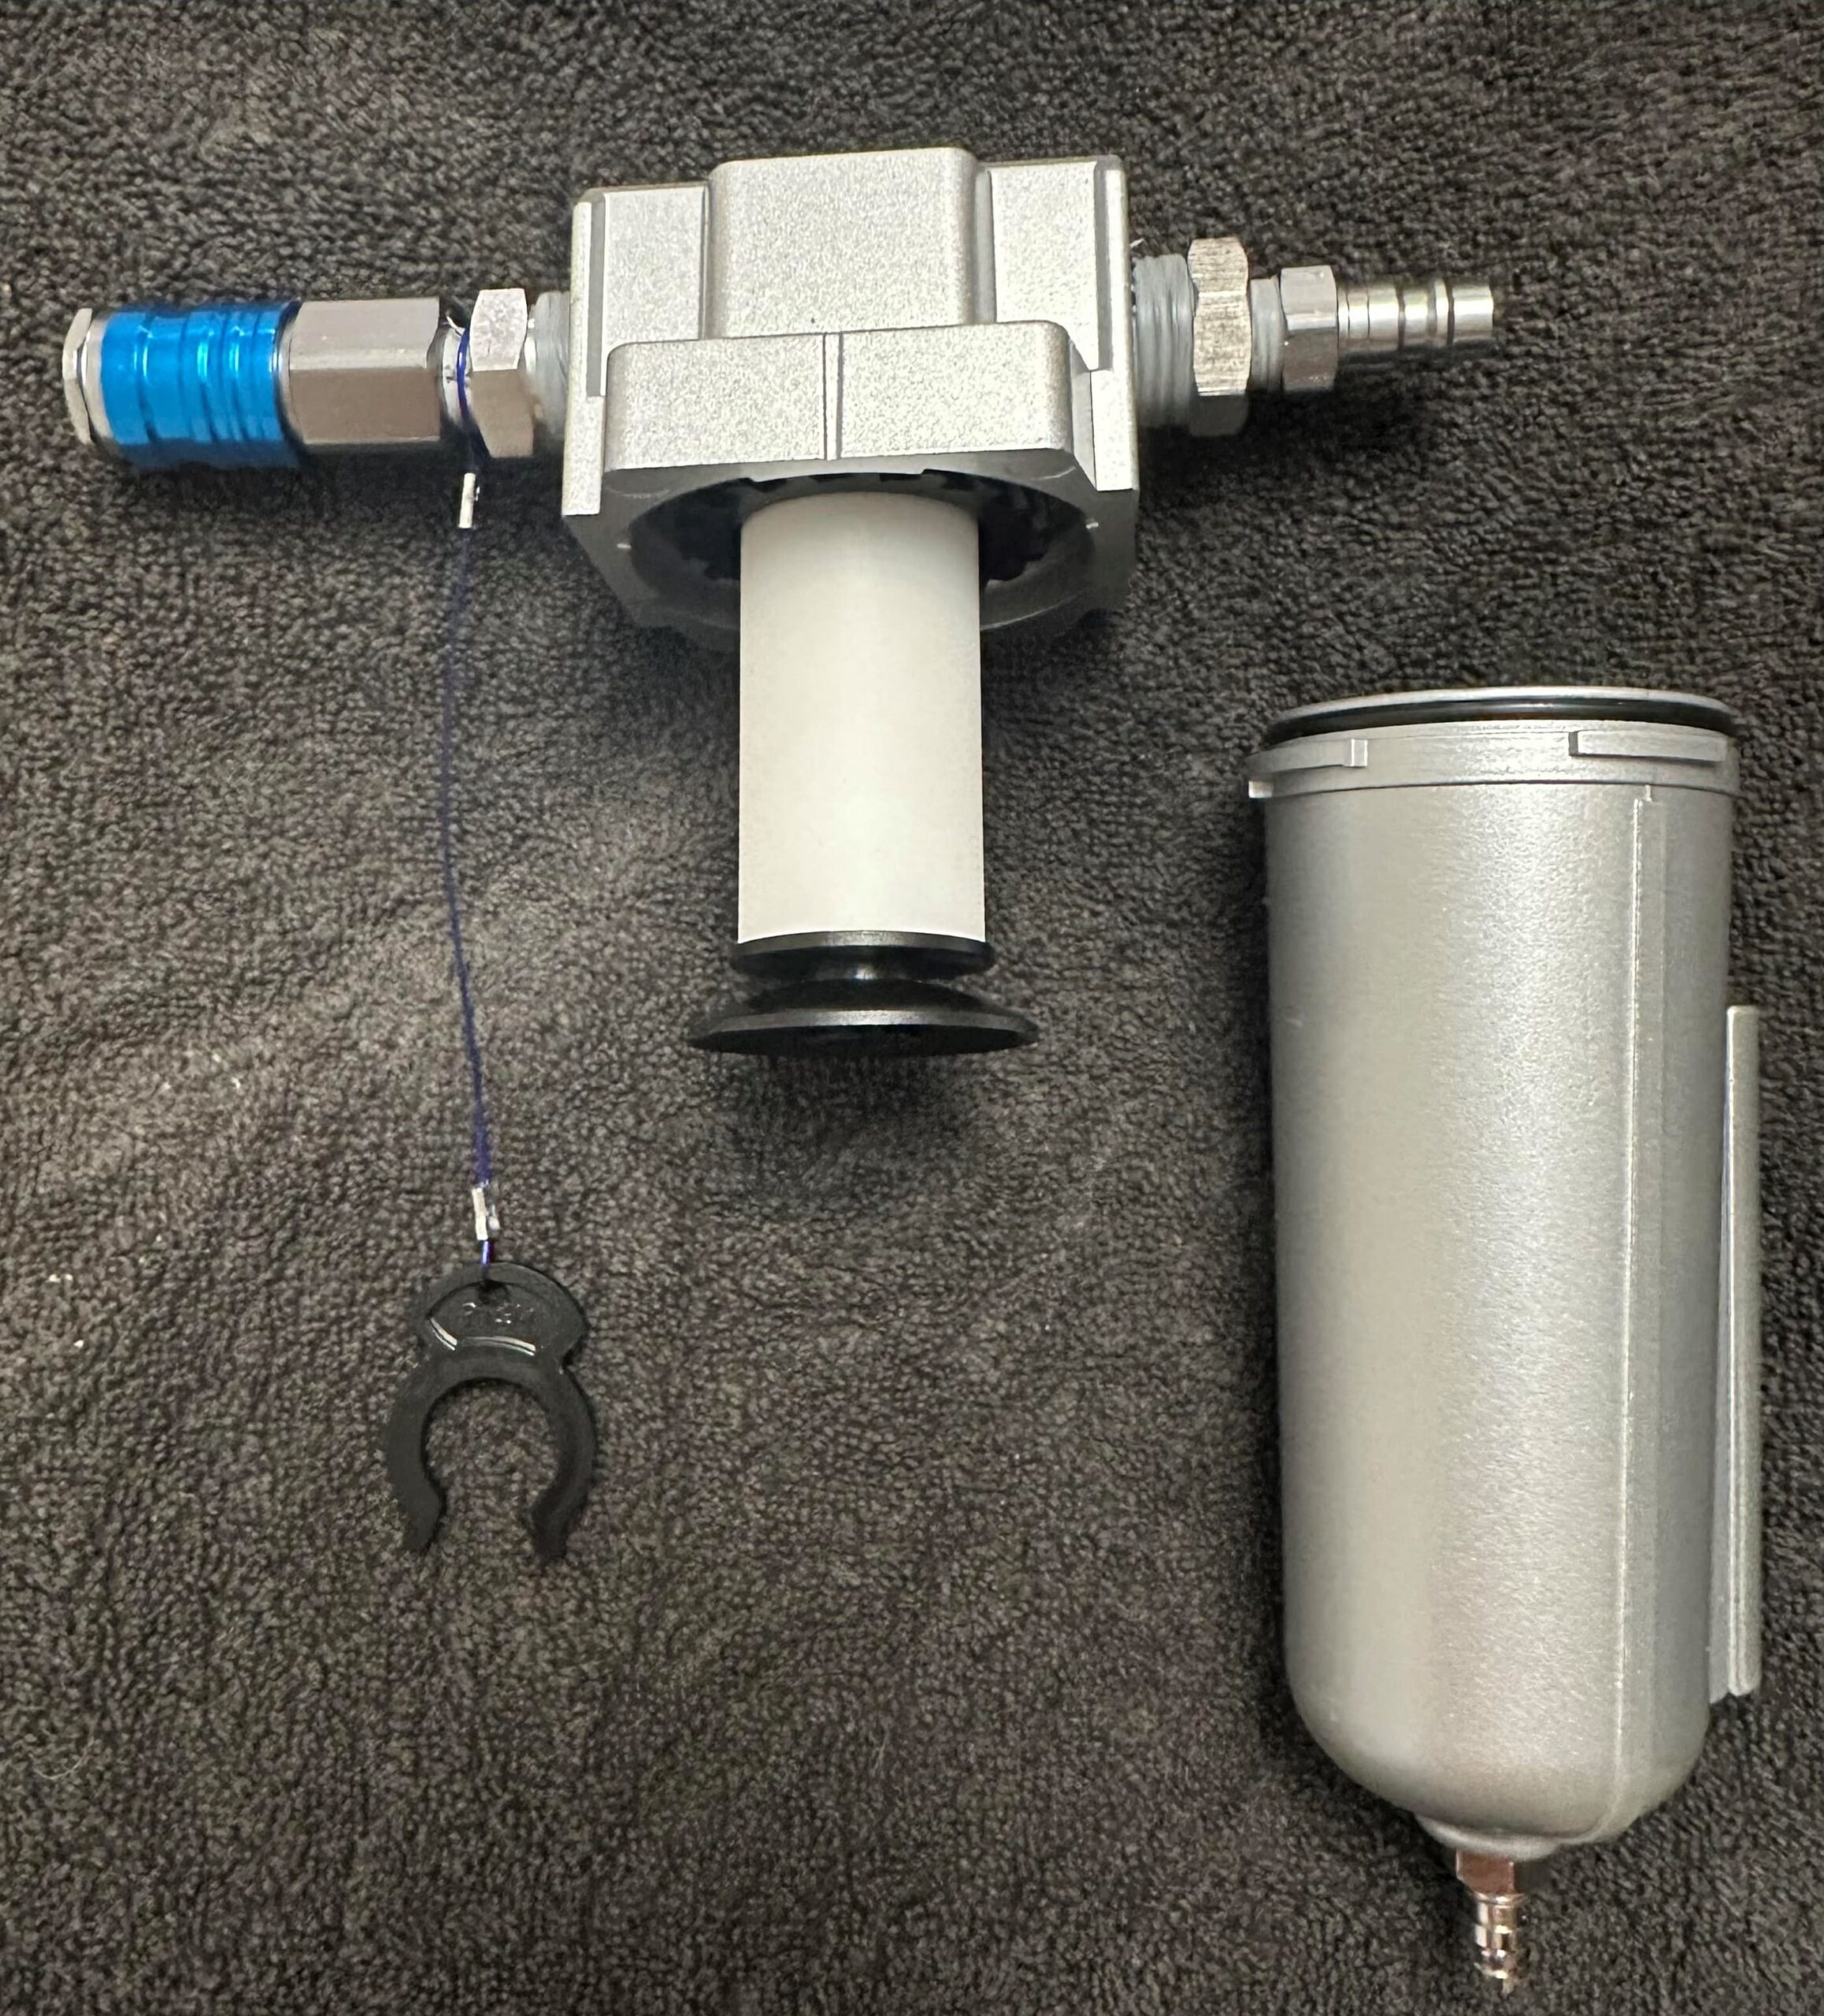 Air tool setup with filter, regulator, lubricator on a dark surface